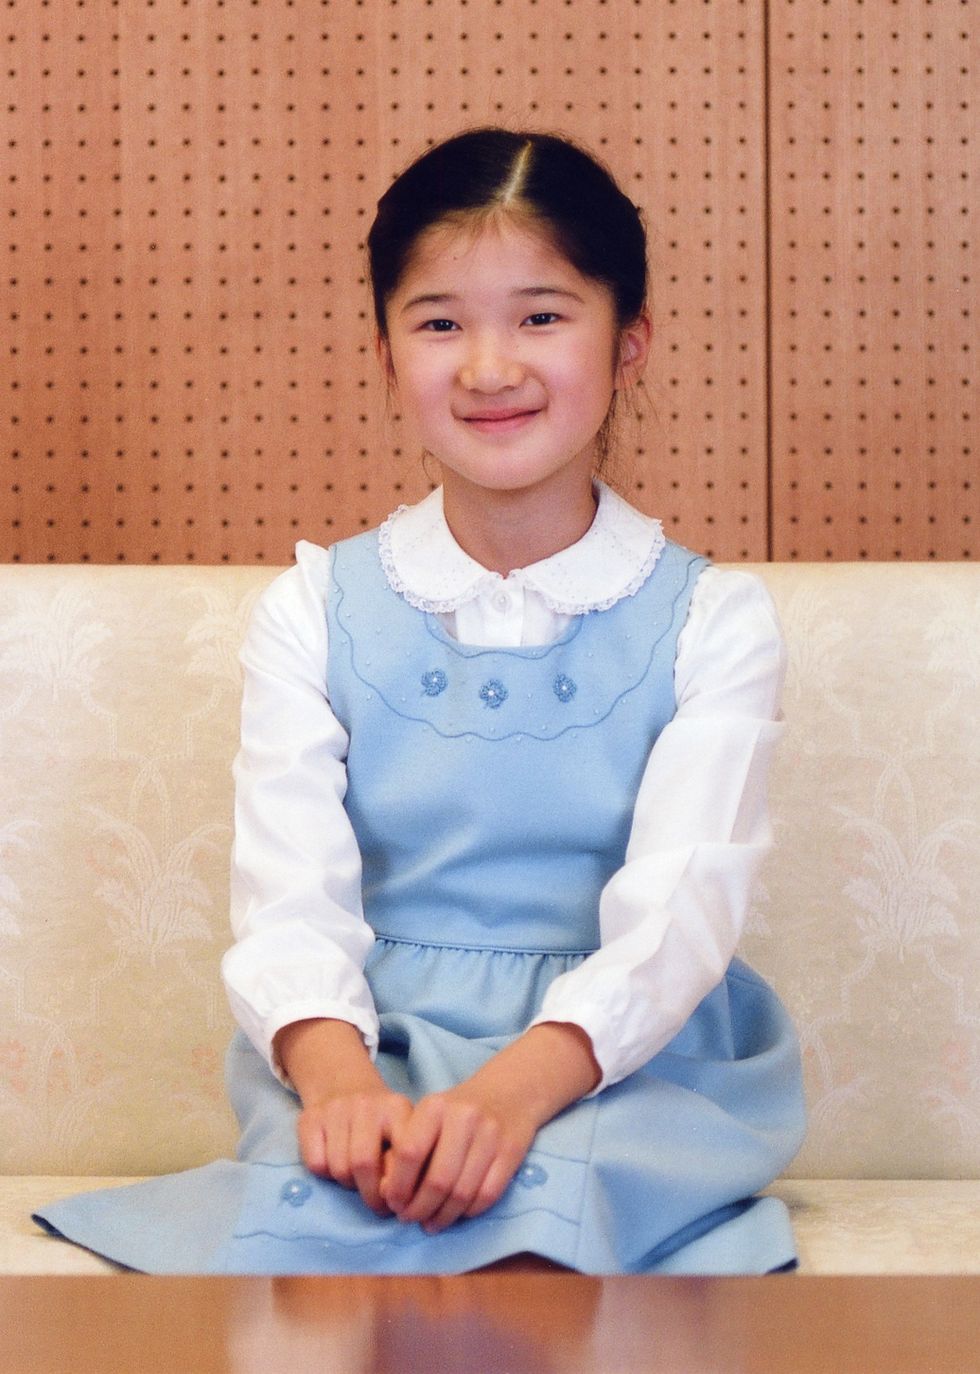 japan princess aiko celebrates her 9th birthday in tokyo, japan on november 23, 2010 